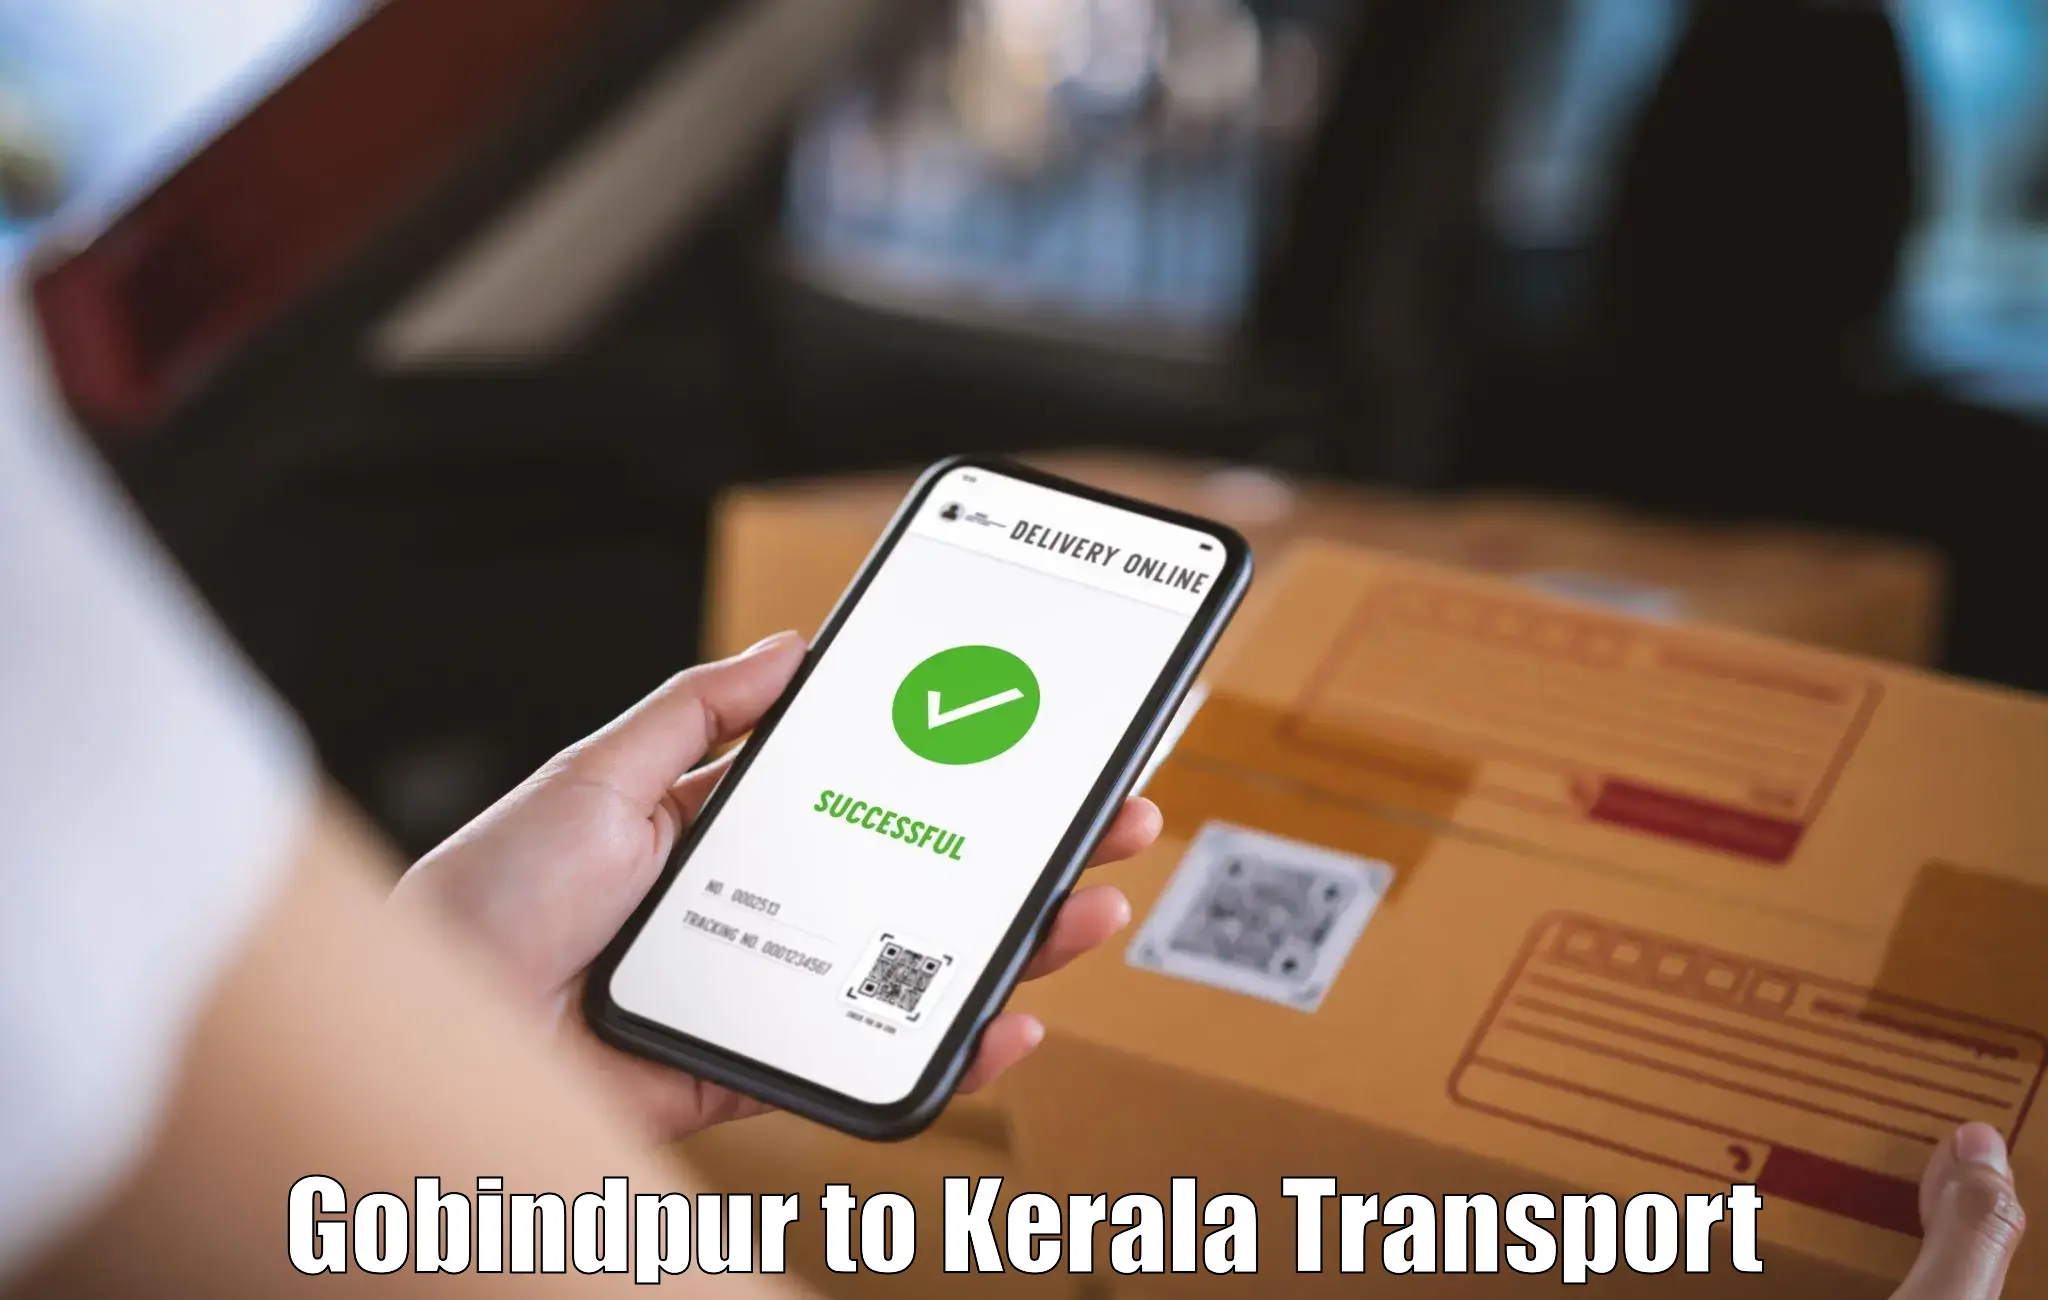 Domestic transport services Gobindpur to Kerala